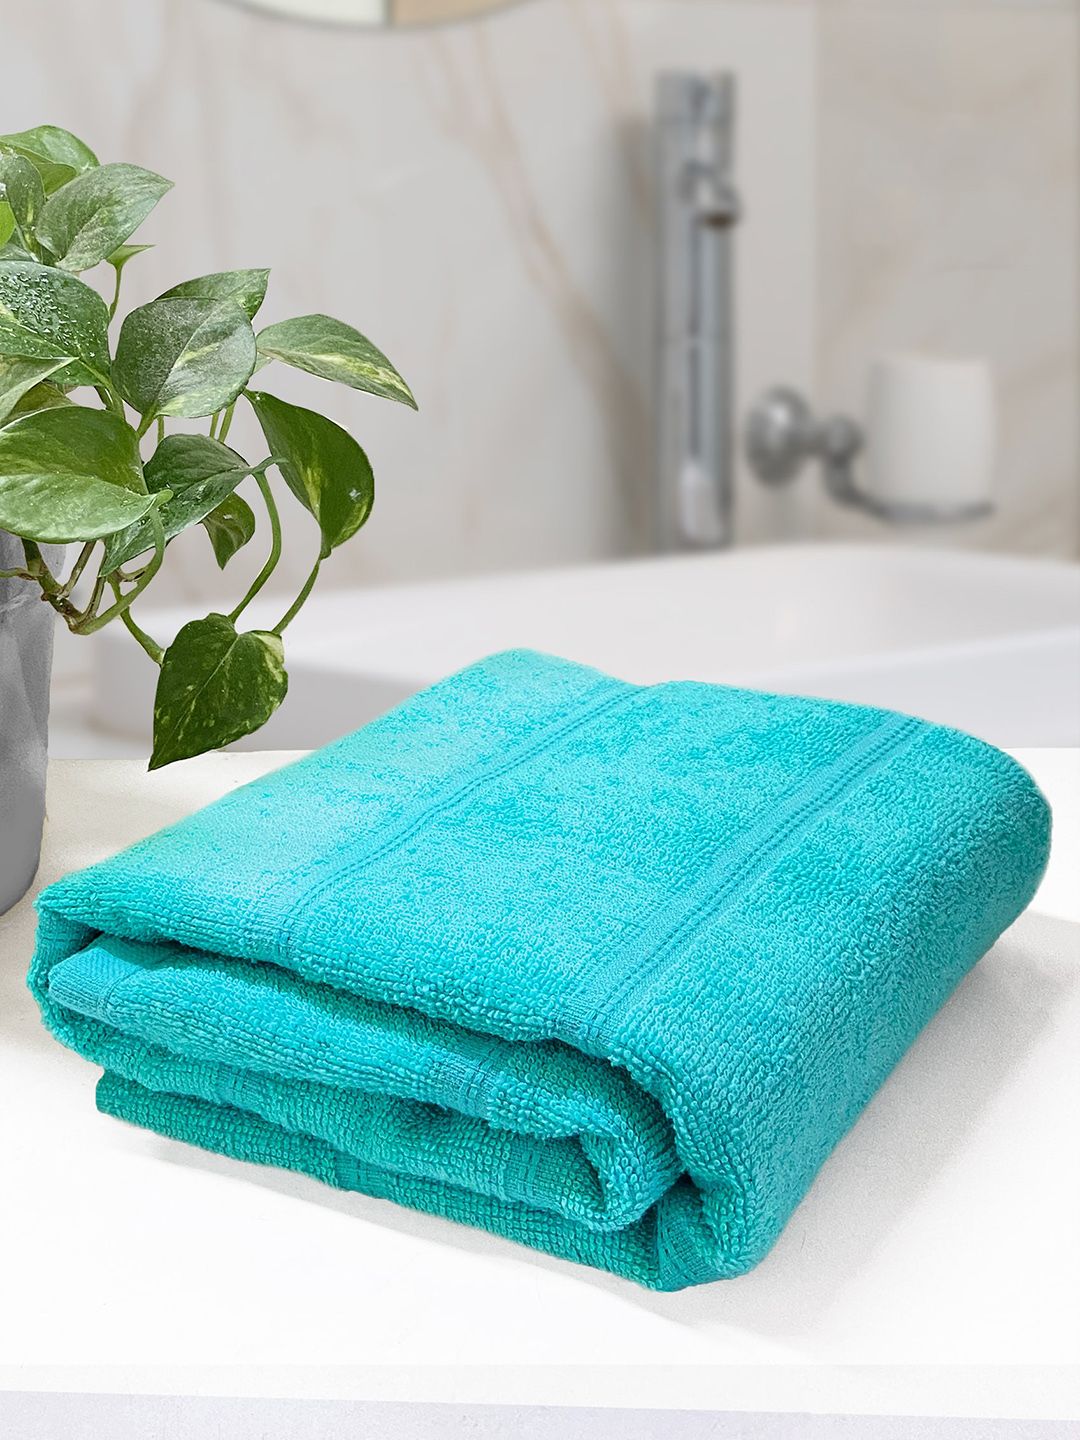 Heelium Teal-Blue Solid 250 GSM Bamboo Gamcha Bath Towel Price in India